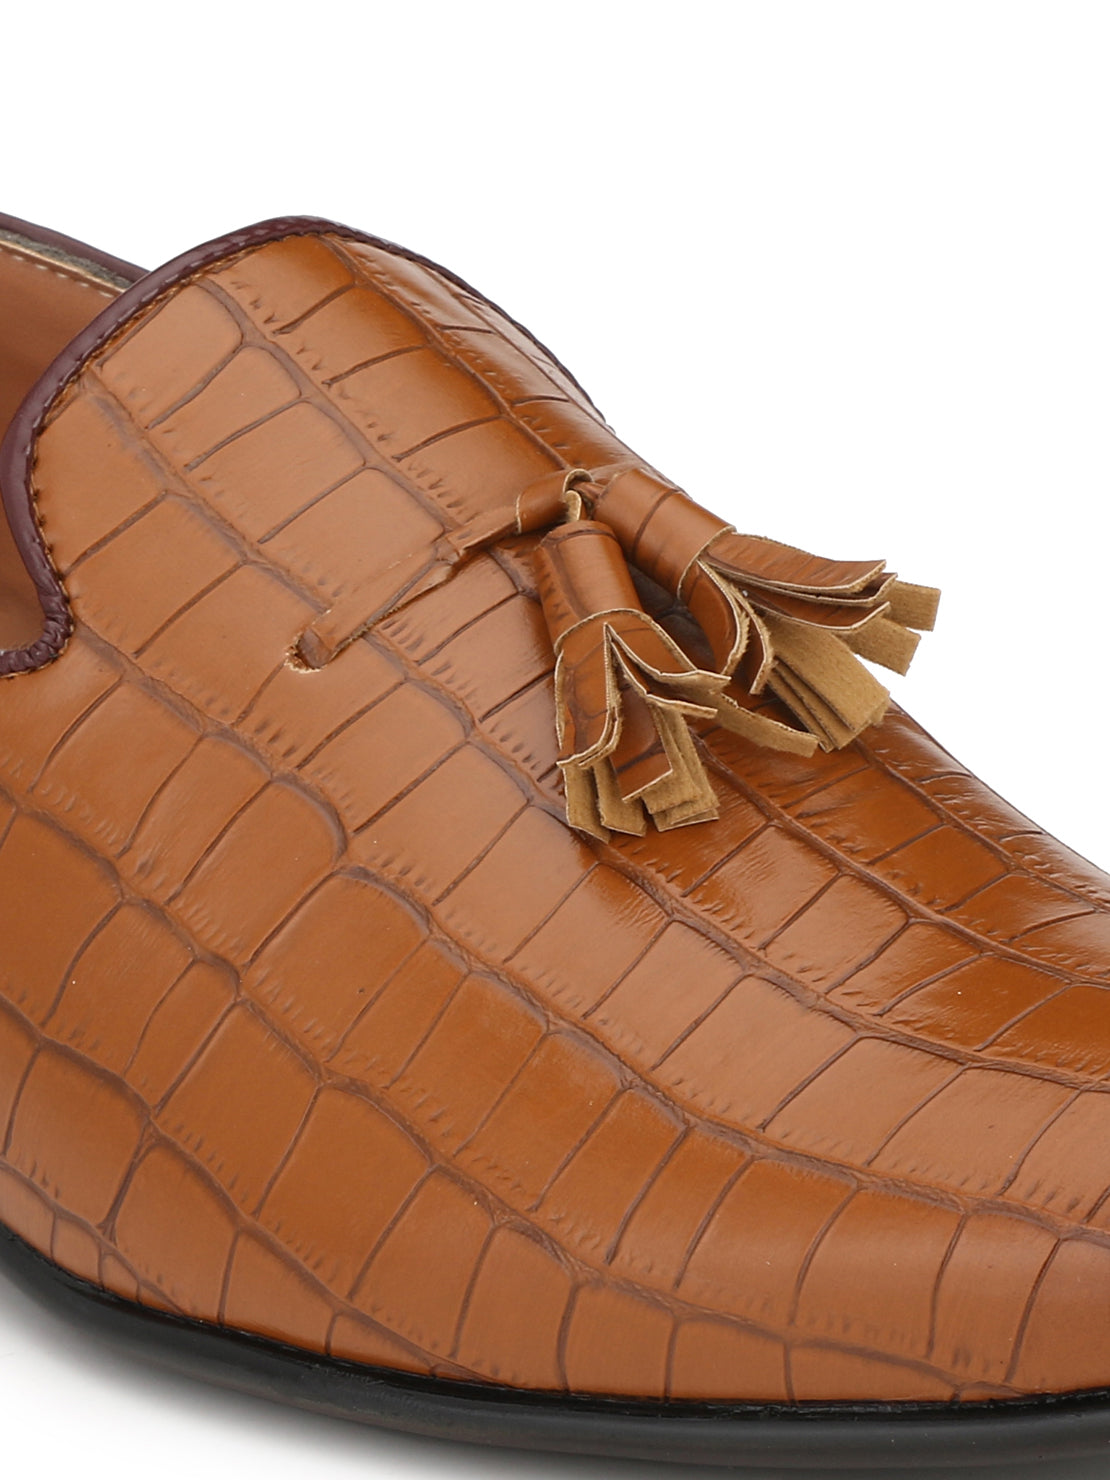 Guava Men's Tan Croco Textured Slip On Semi Formal Shoes (GV15JA653)